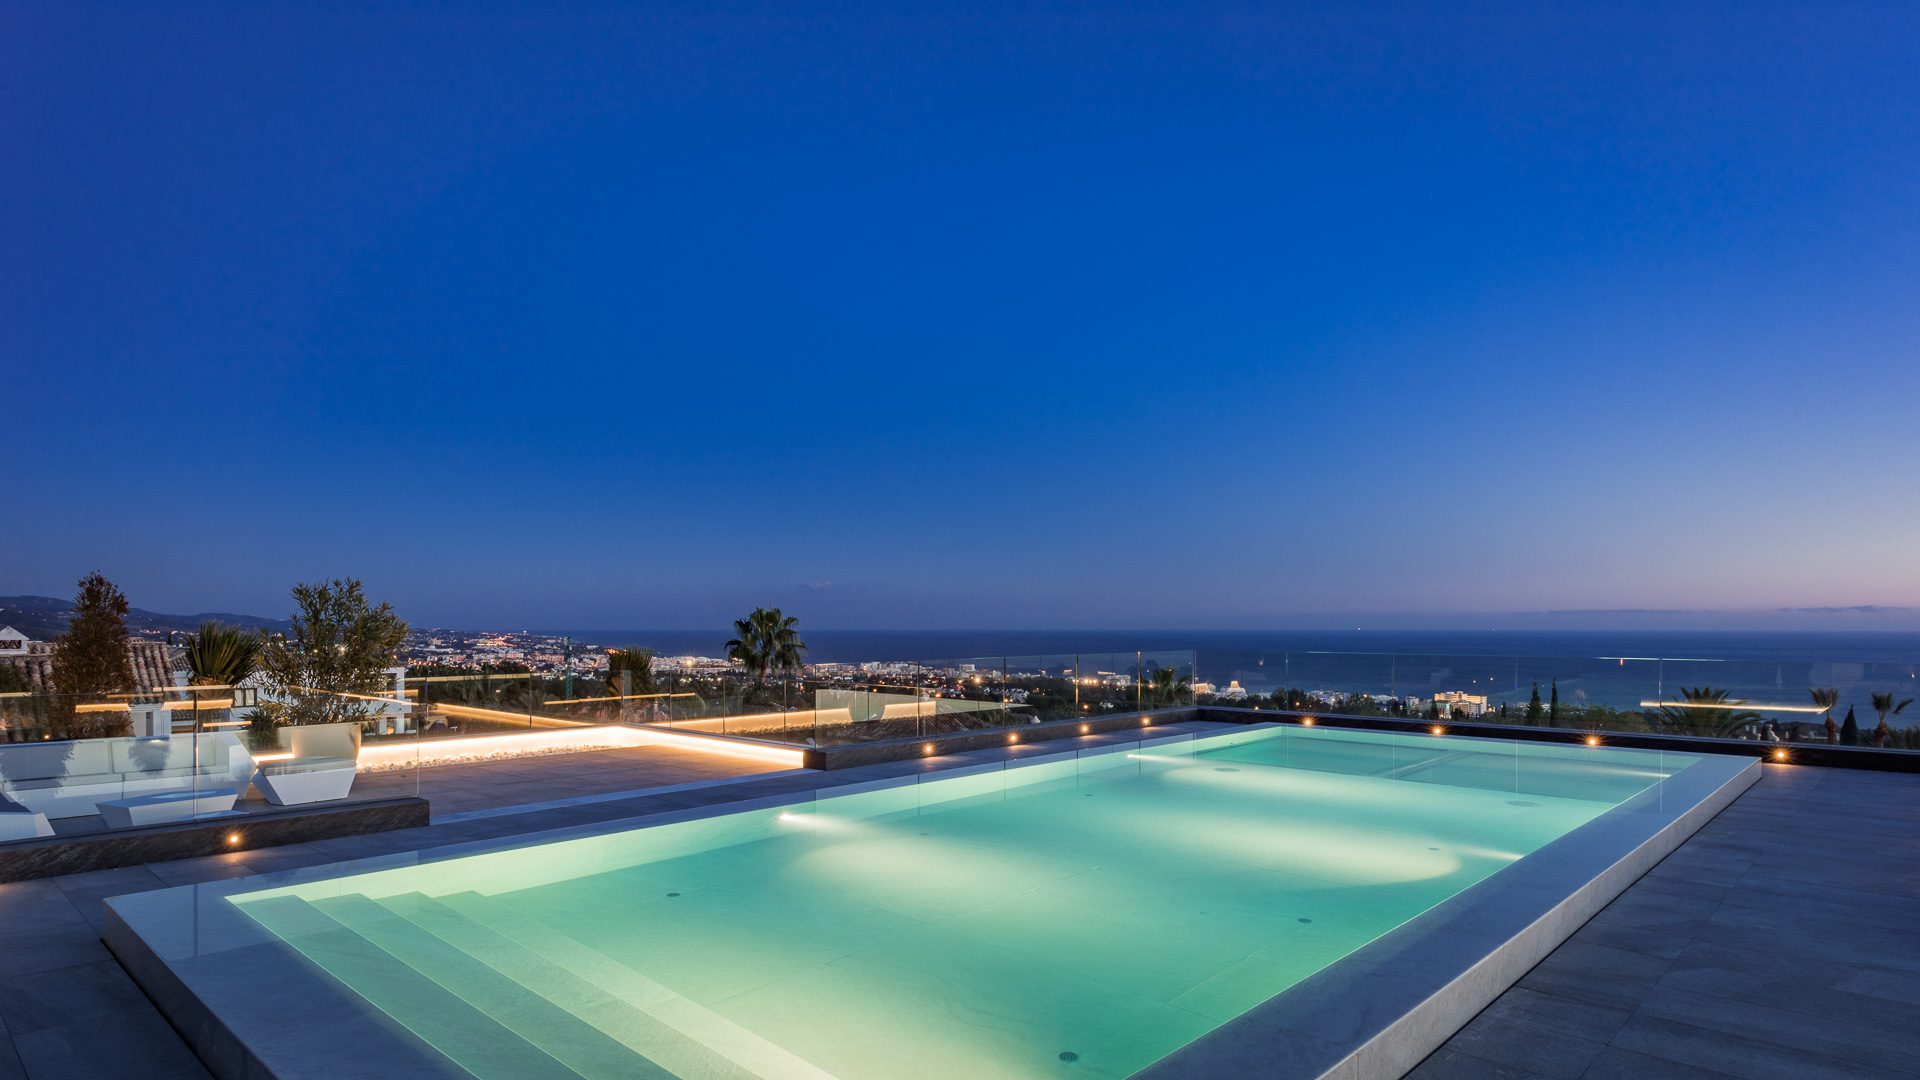 Edge swimming pool Luxury Villa in Sierra Blanca, Marbella